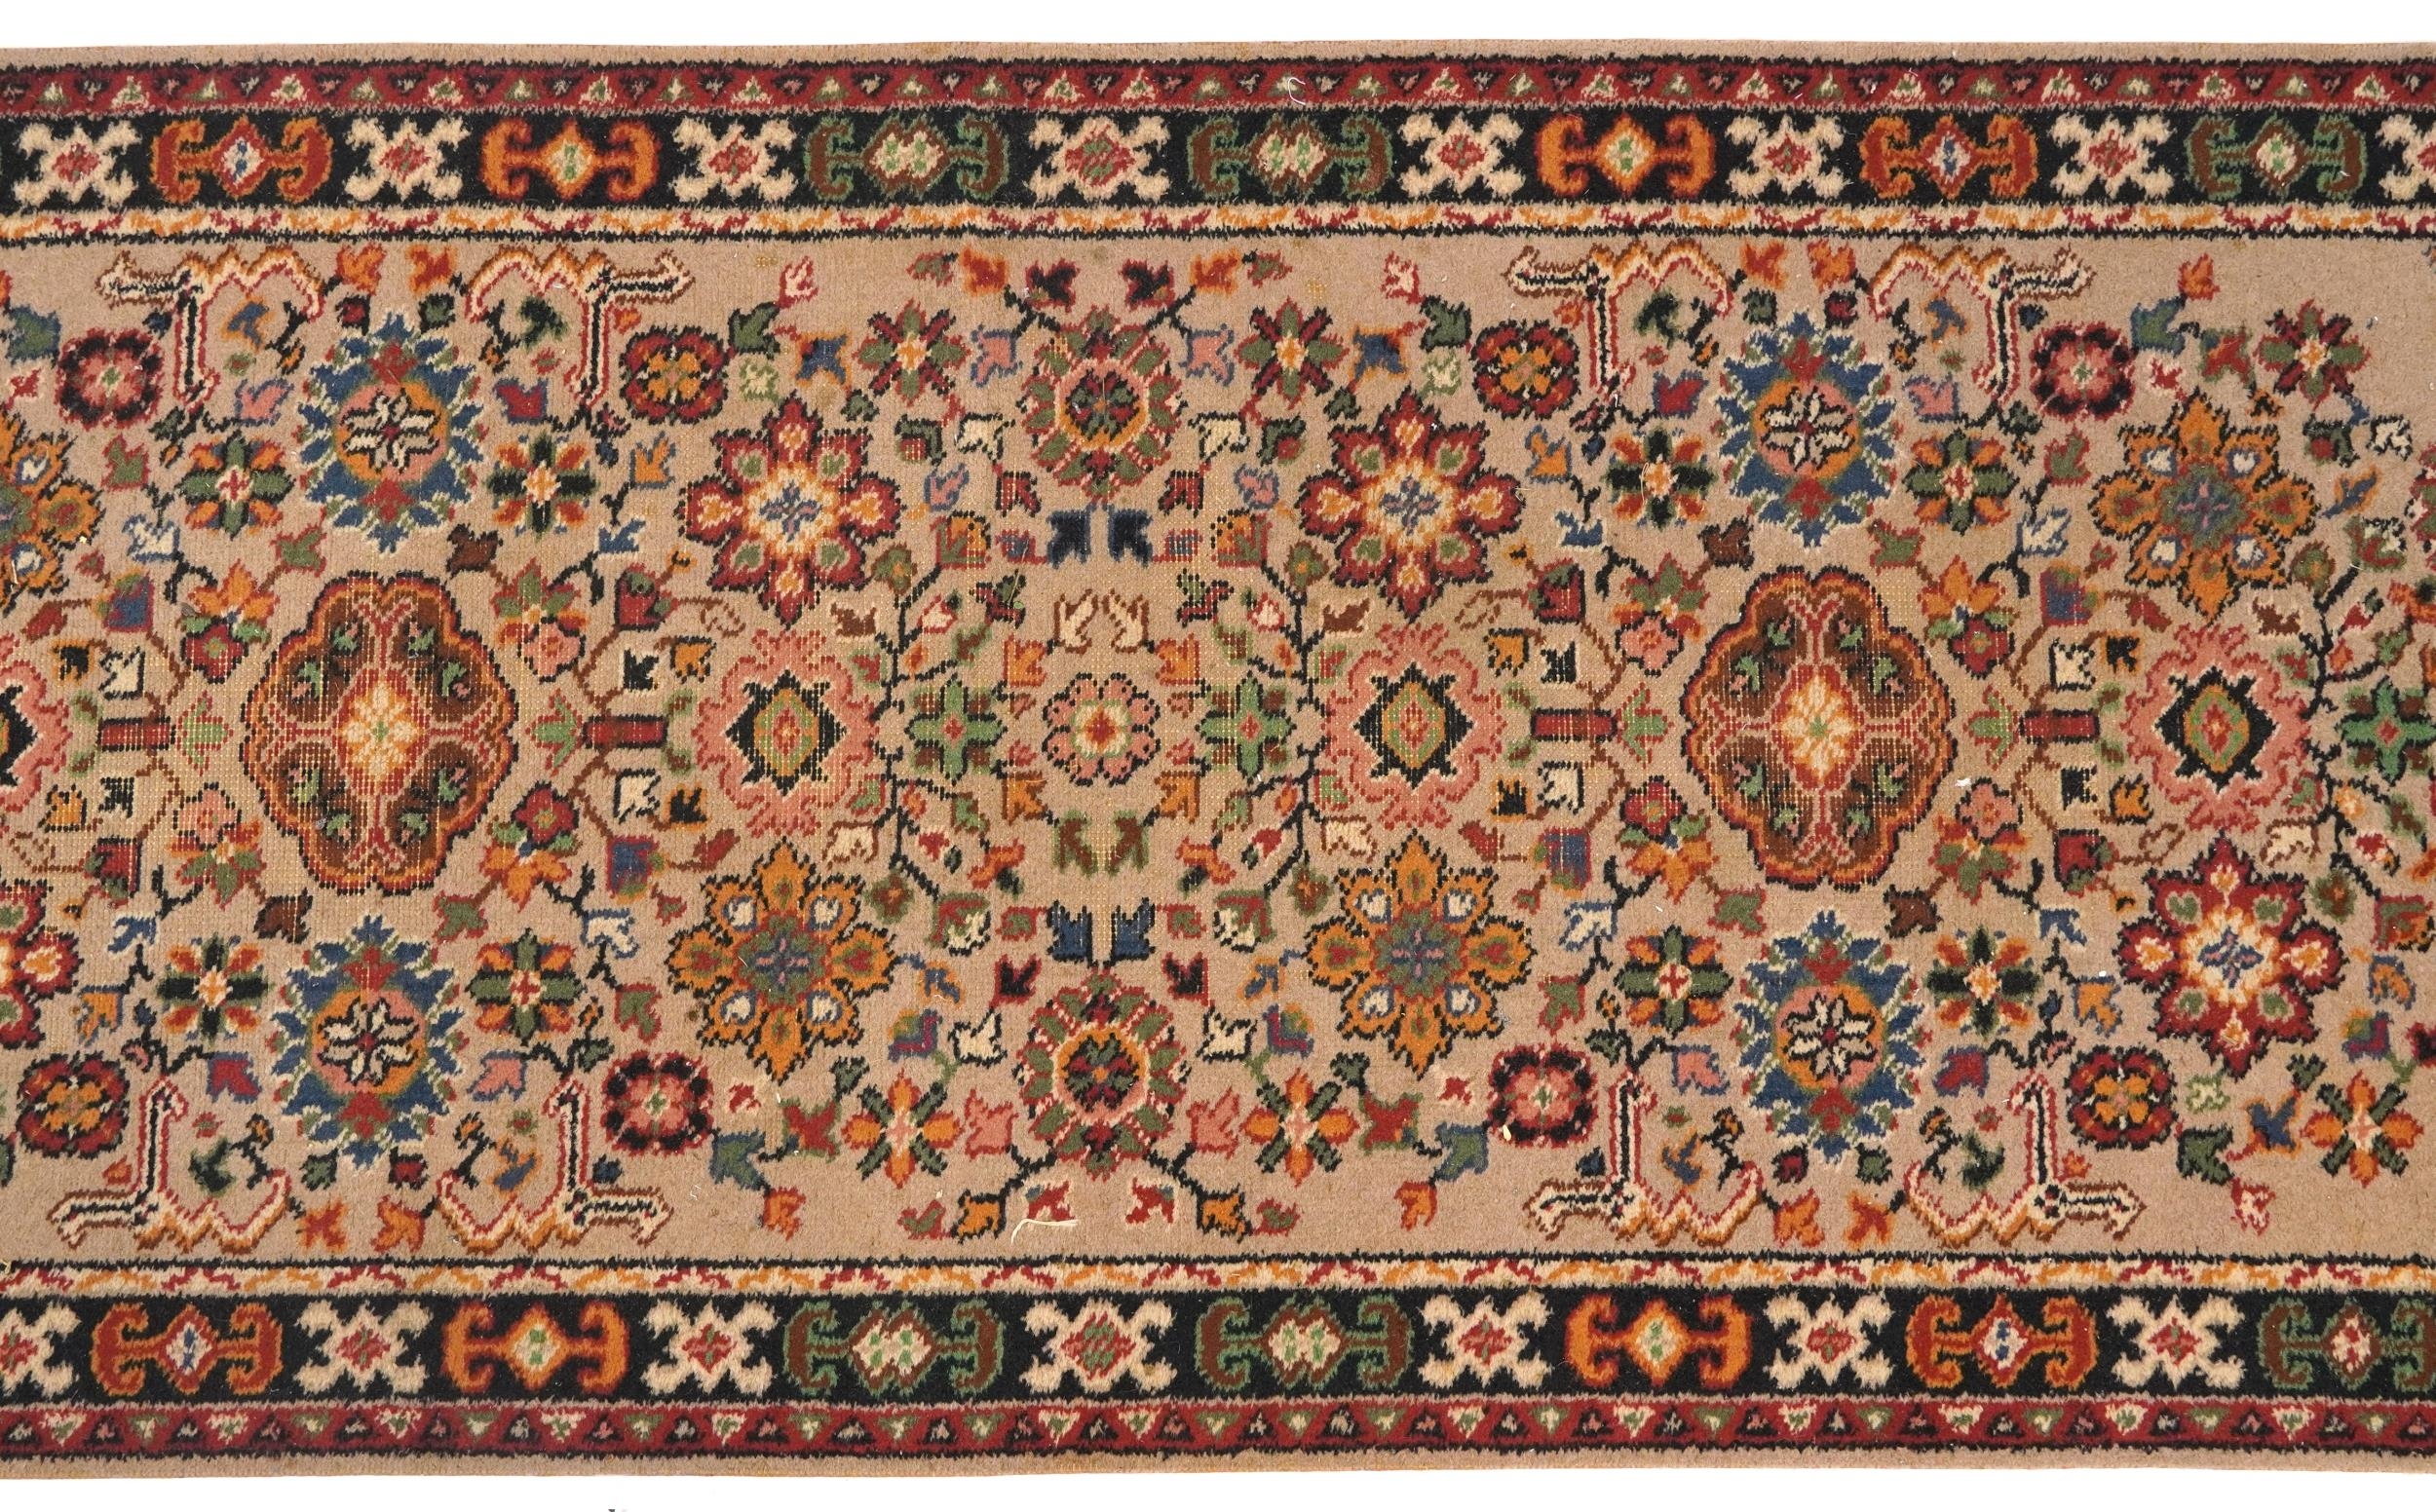 Rectangular floral carpet runner the central field having a beige ground, 270cm x 90cm - Image 3 of 5